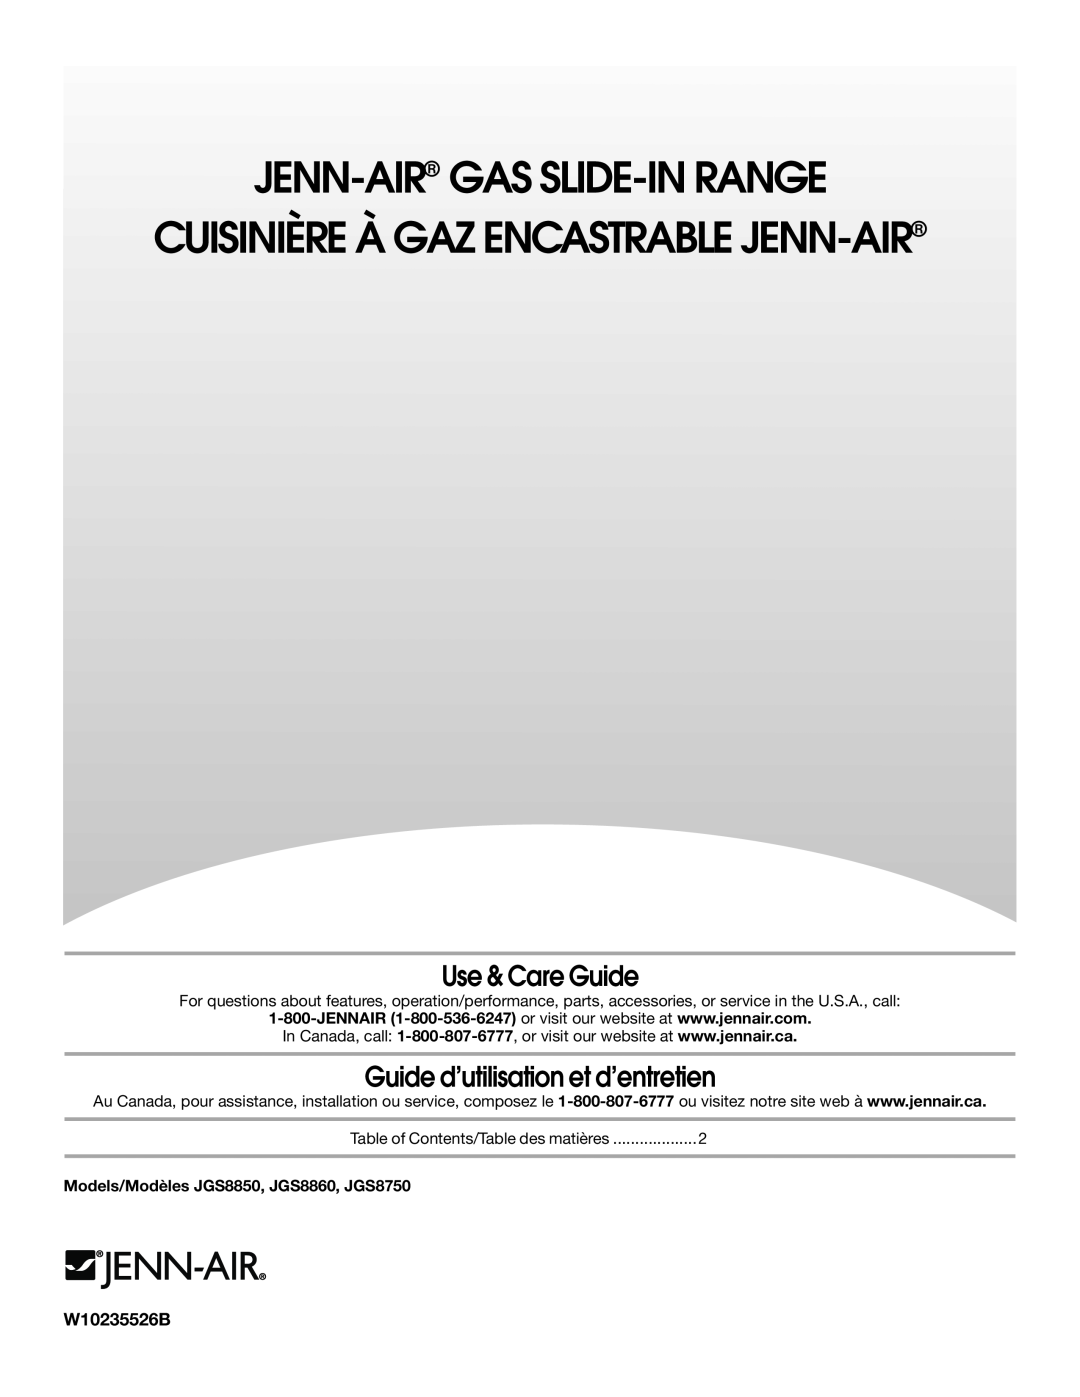 Jenn-Air JGS8860 manual Jenn-Air Gas Slide-Inrange, Cuisinière À Gaz Encastrable Jenn-Air, Use & Care Guide, W10430915A 